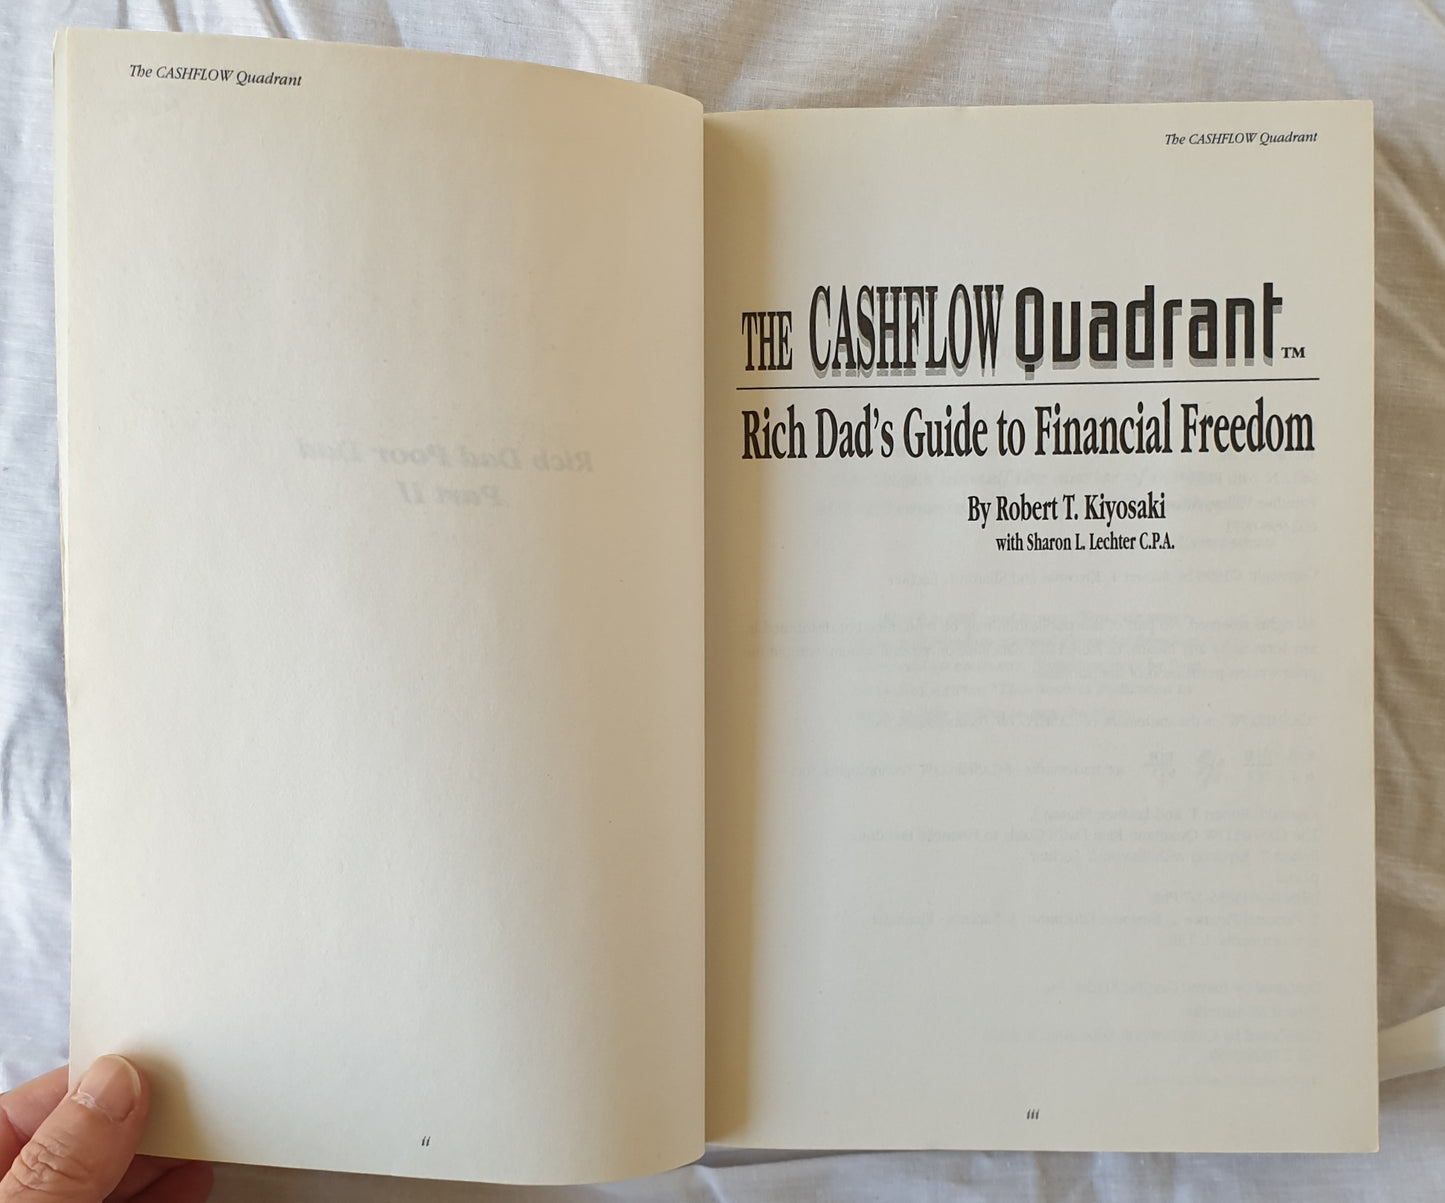 The Cashflow Quadrant by Robert T. Kiyosaki